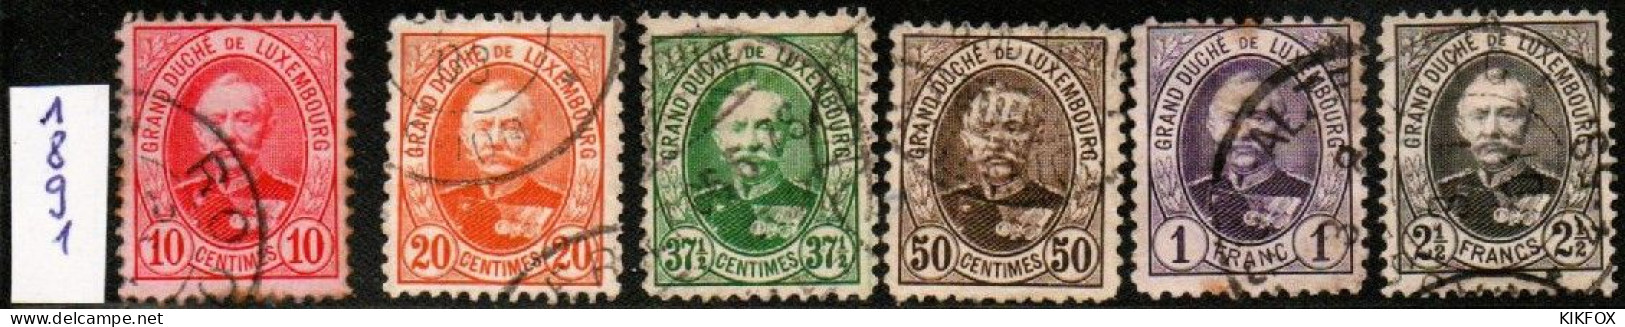 Luxembourg , Luxemburg ,1891, MI 57  59, 62, 63, 64, 65, GROSSHERZOG ADOLF, GESTEMPELT,OBLITERE, - 1895 Adolfo Di Profilo